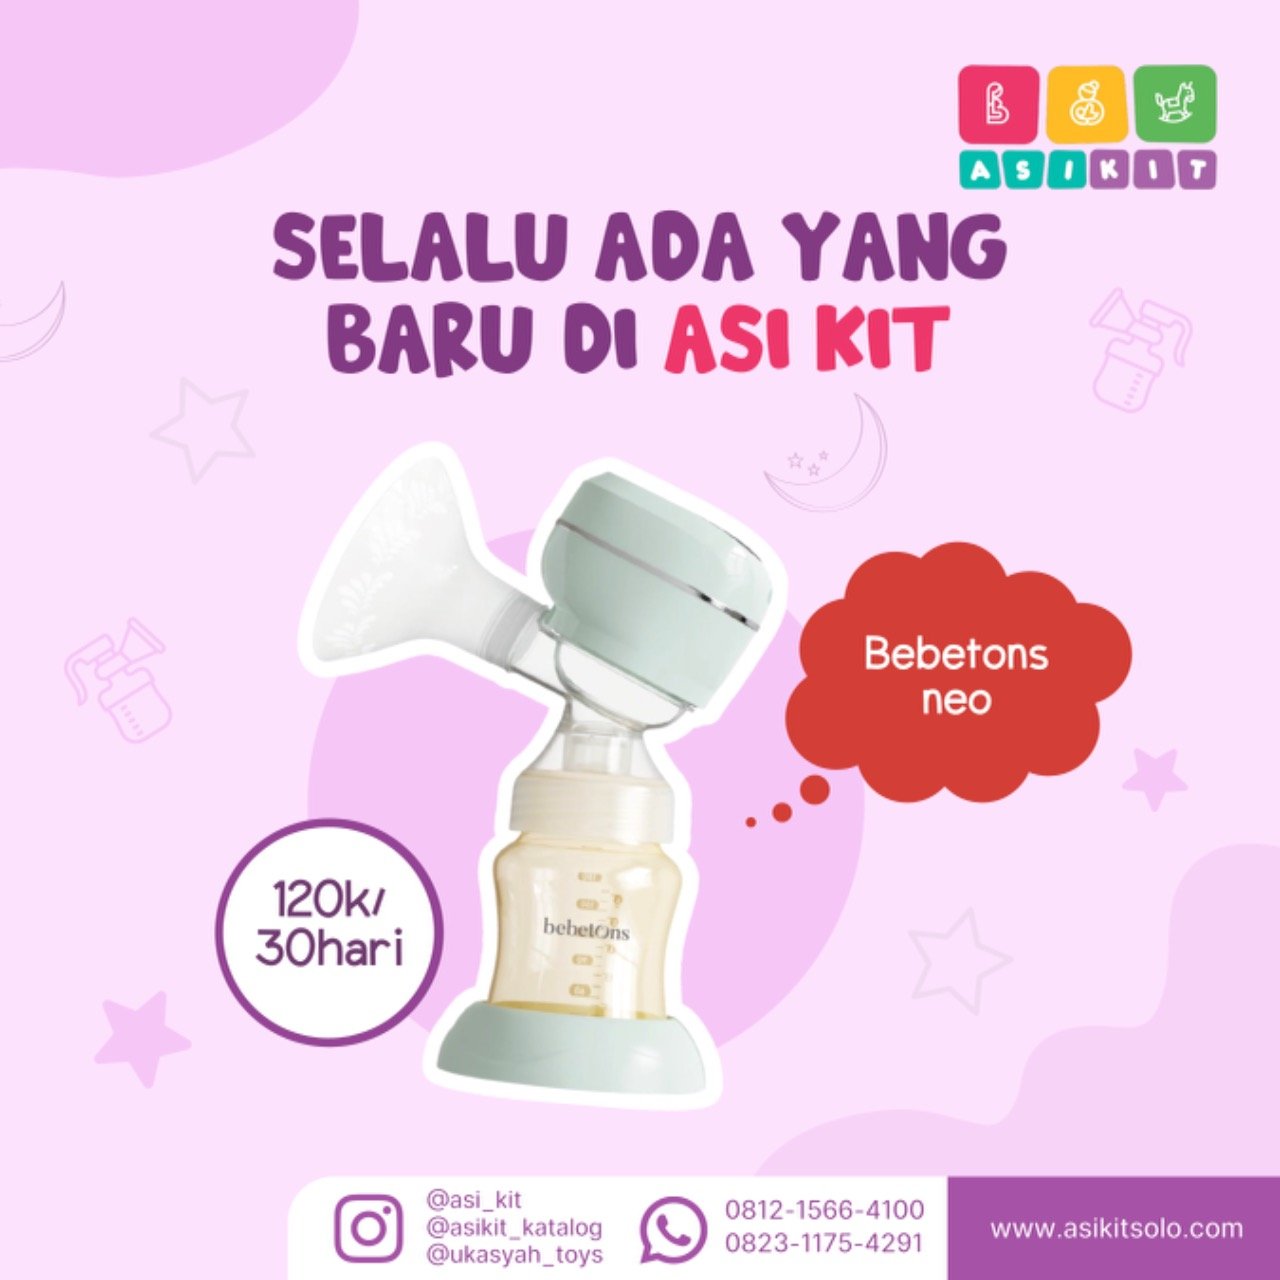 Promo Sewa Pumping Asi - 2 Minggu Diskon 33% di Seller Luna Baby & Kids -  Pinangsia, Kota Jakarta Barat